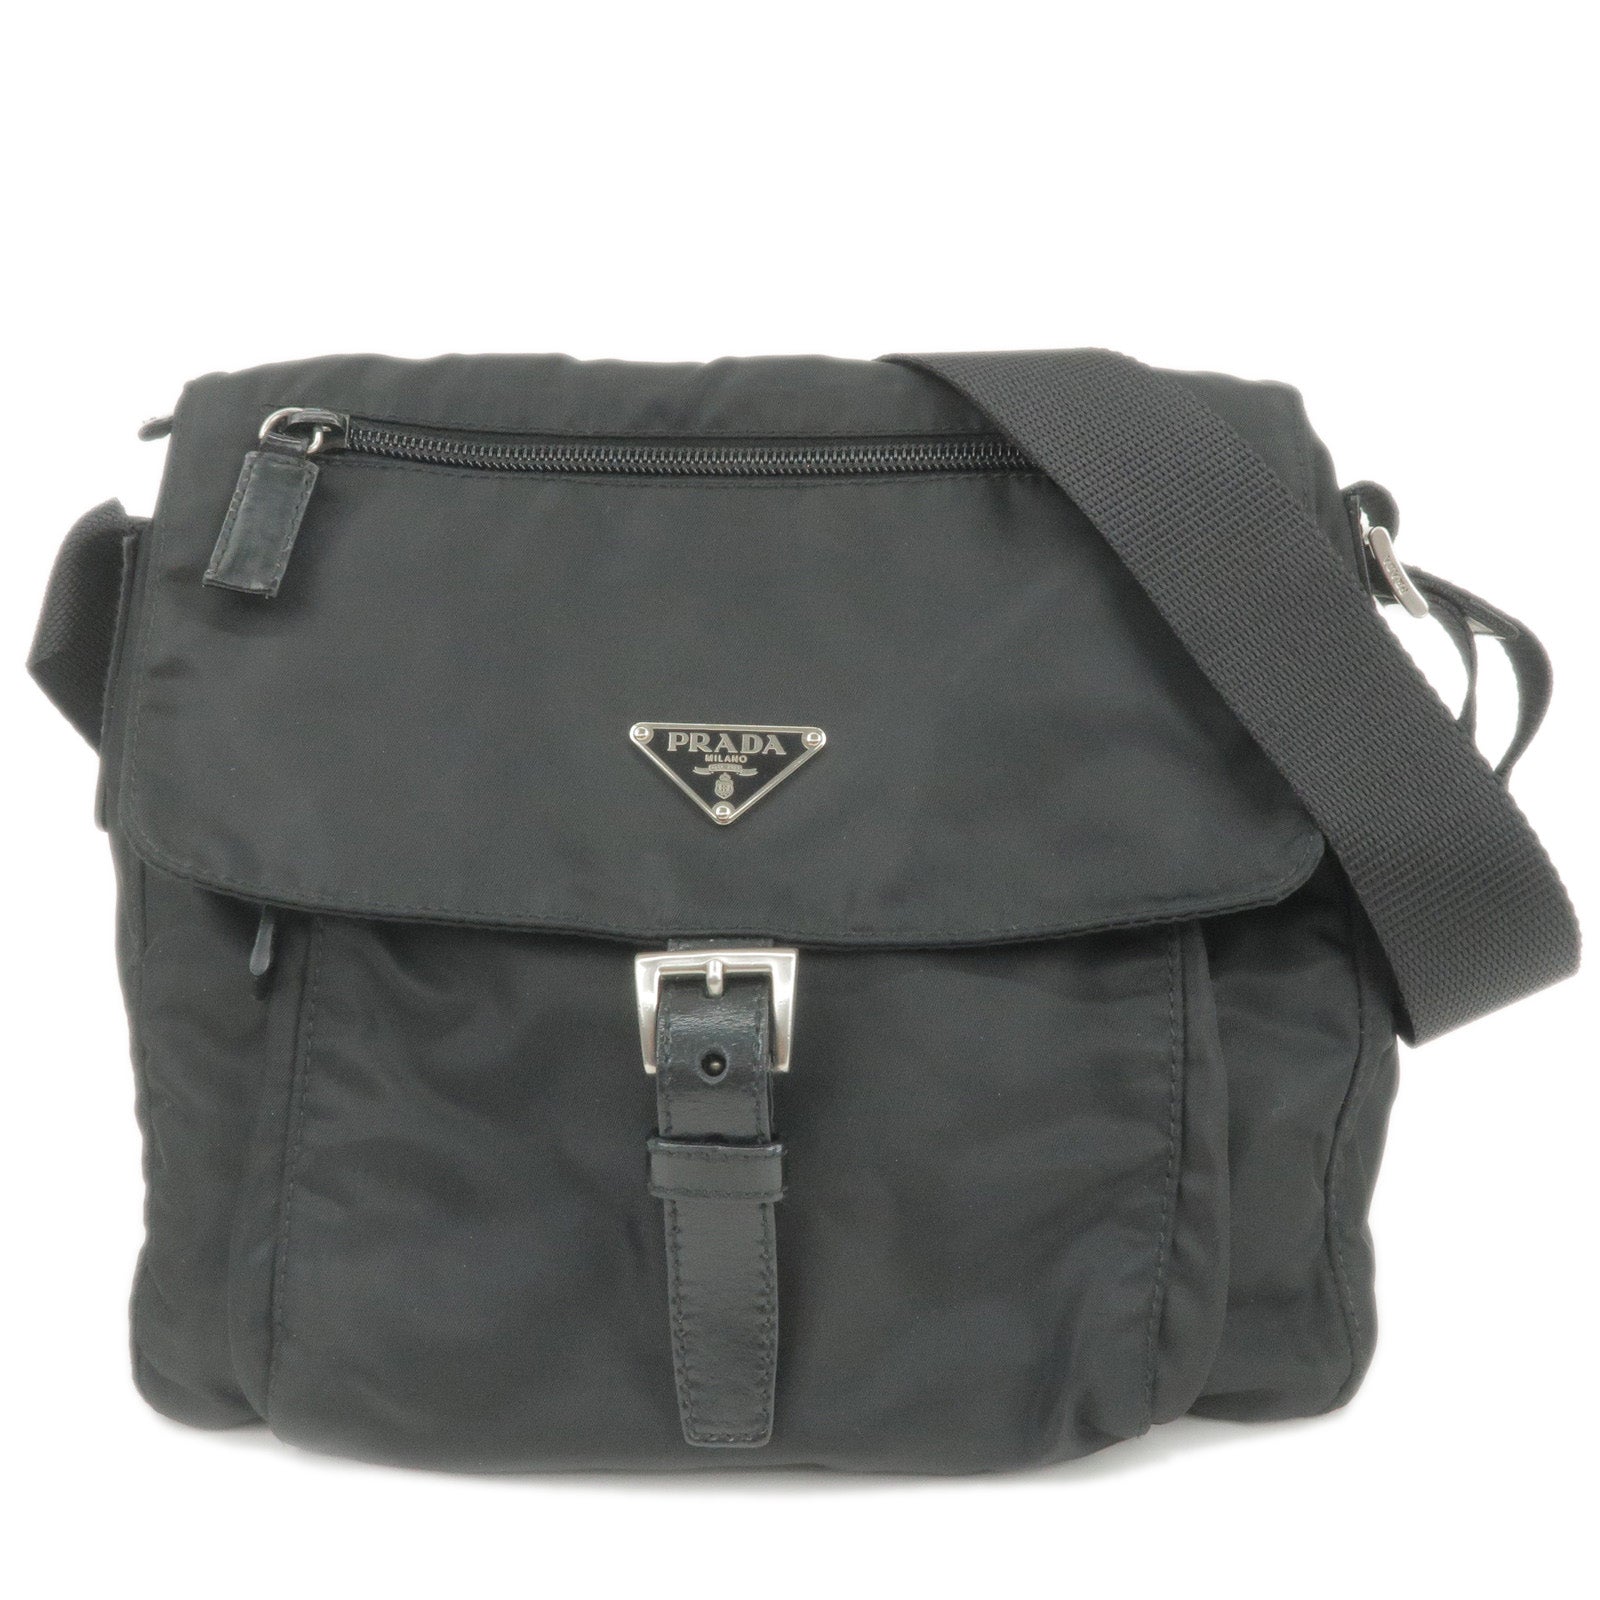 PRADA-Logo-Nylon-Leather-Shoulder-Bag-Purse-Bag-NERO-Black